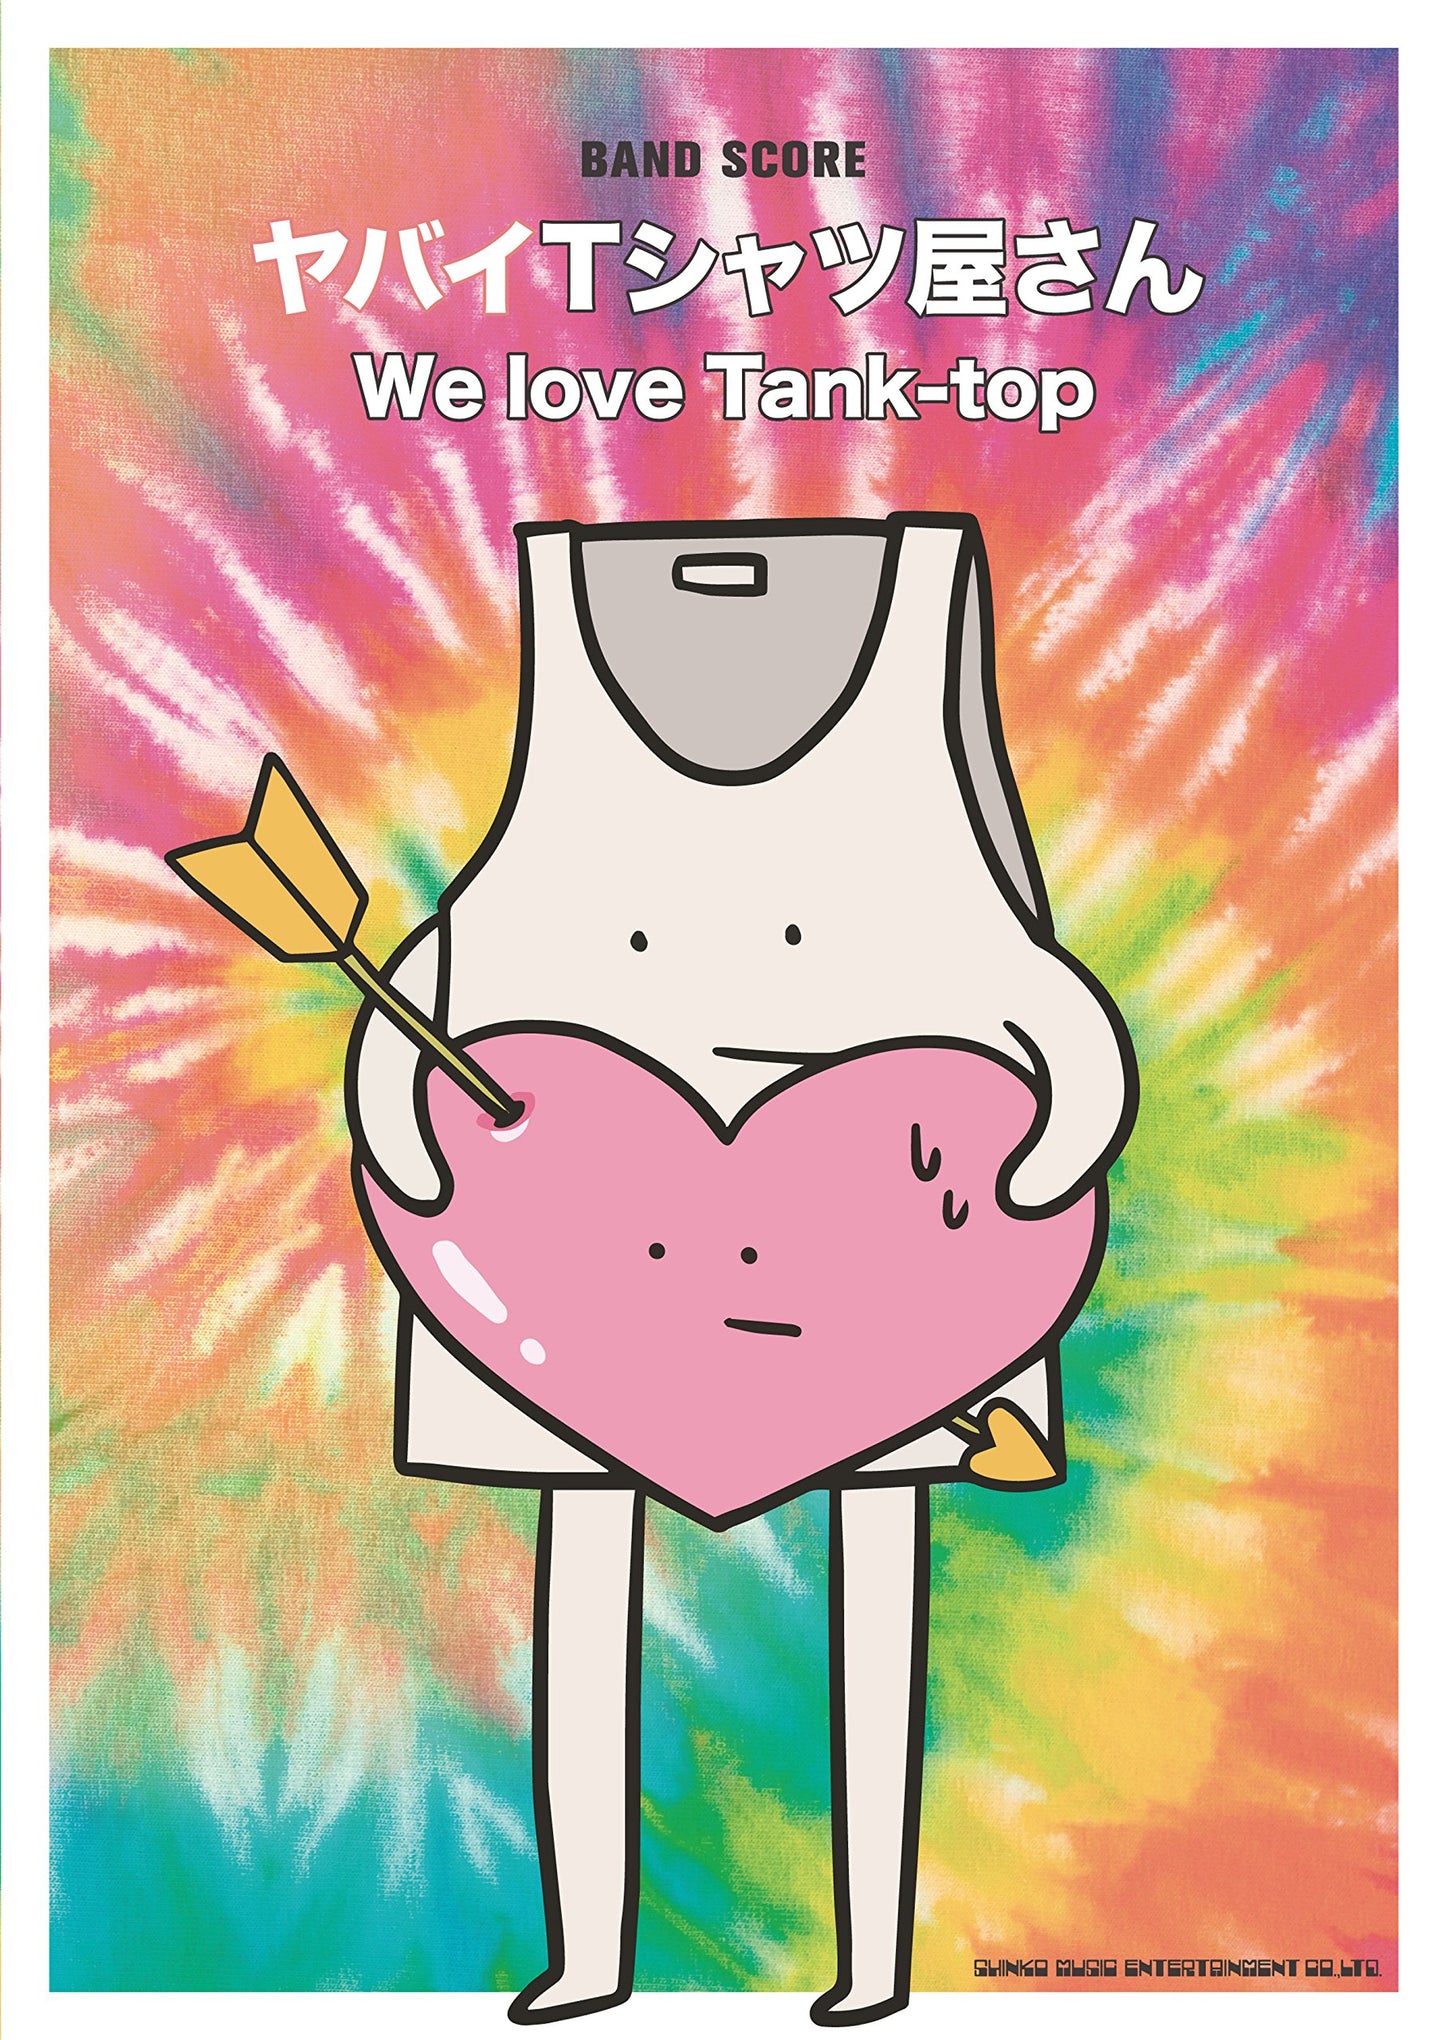 J-pop Yabai T-Shirts Yasan "We love Tank-top" Band Score Sheet Music Book